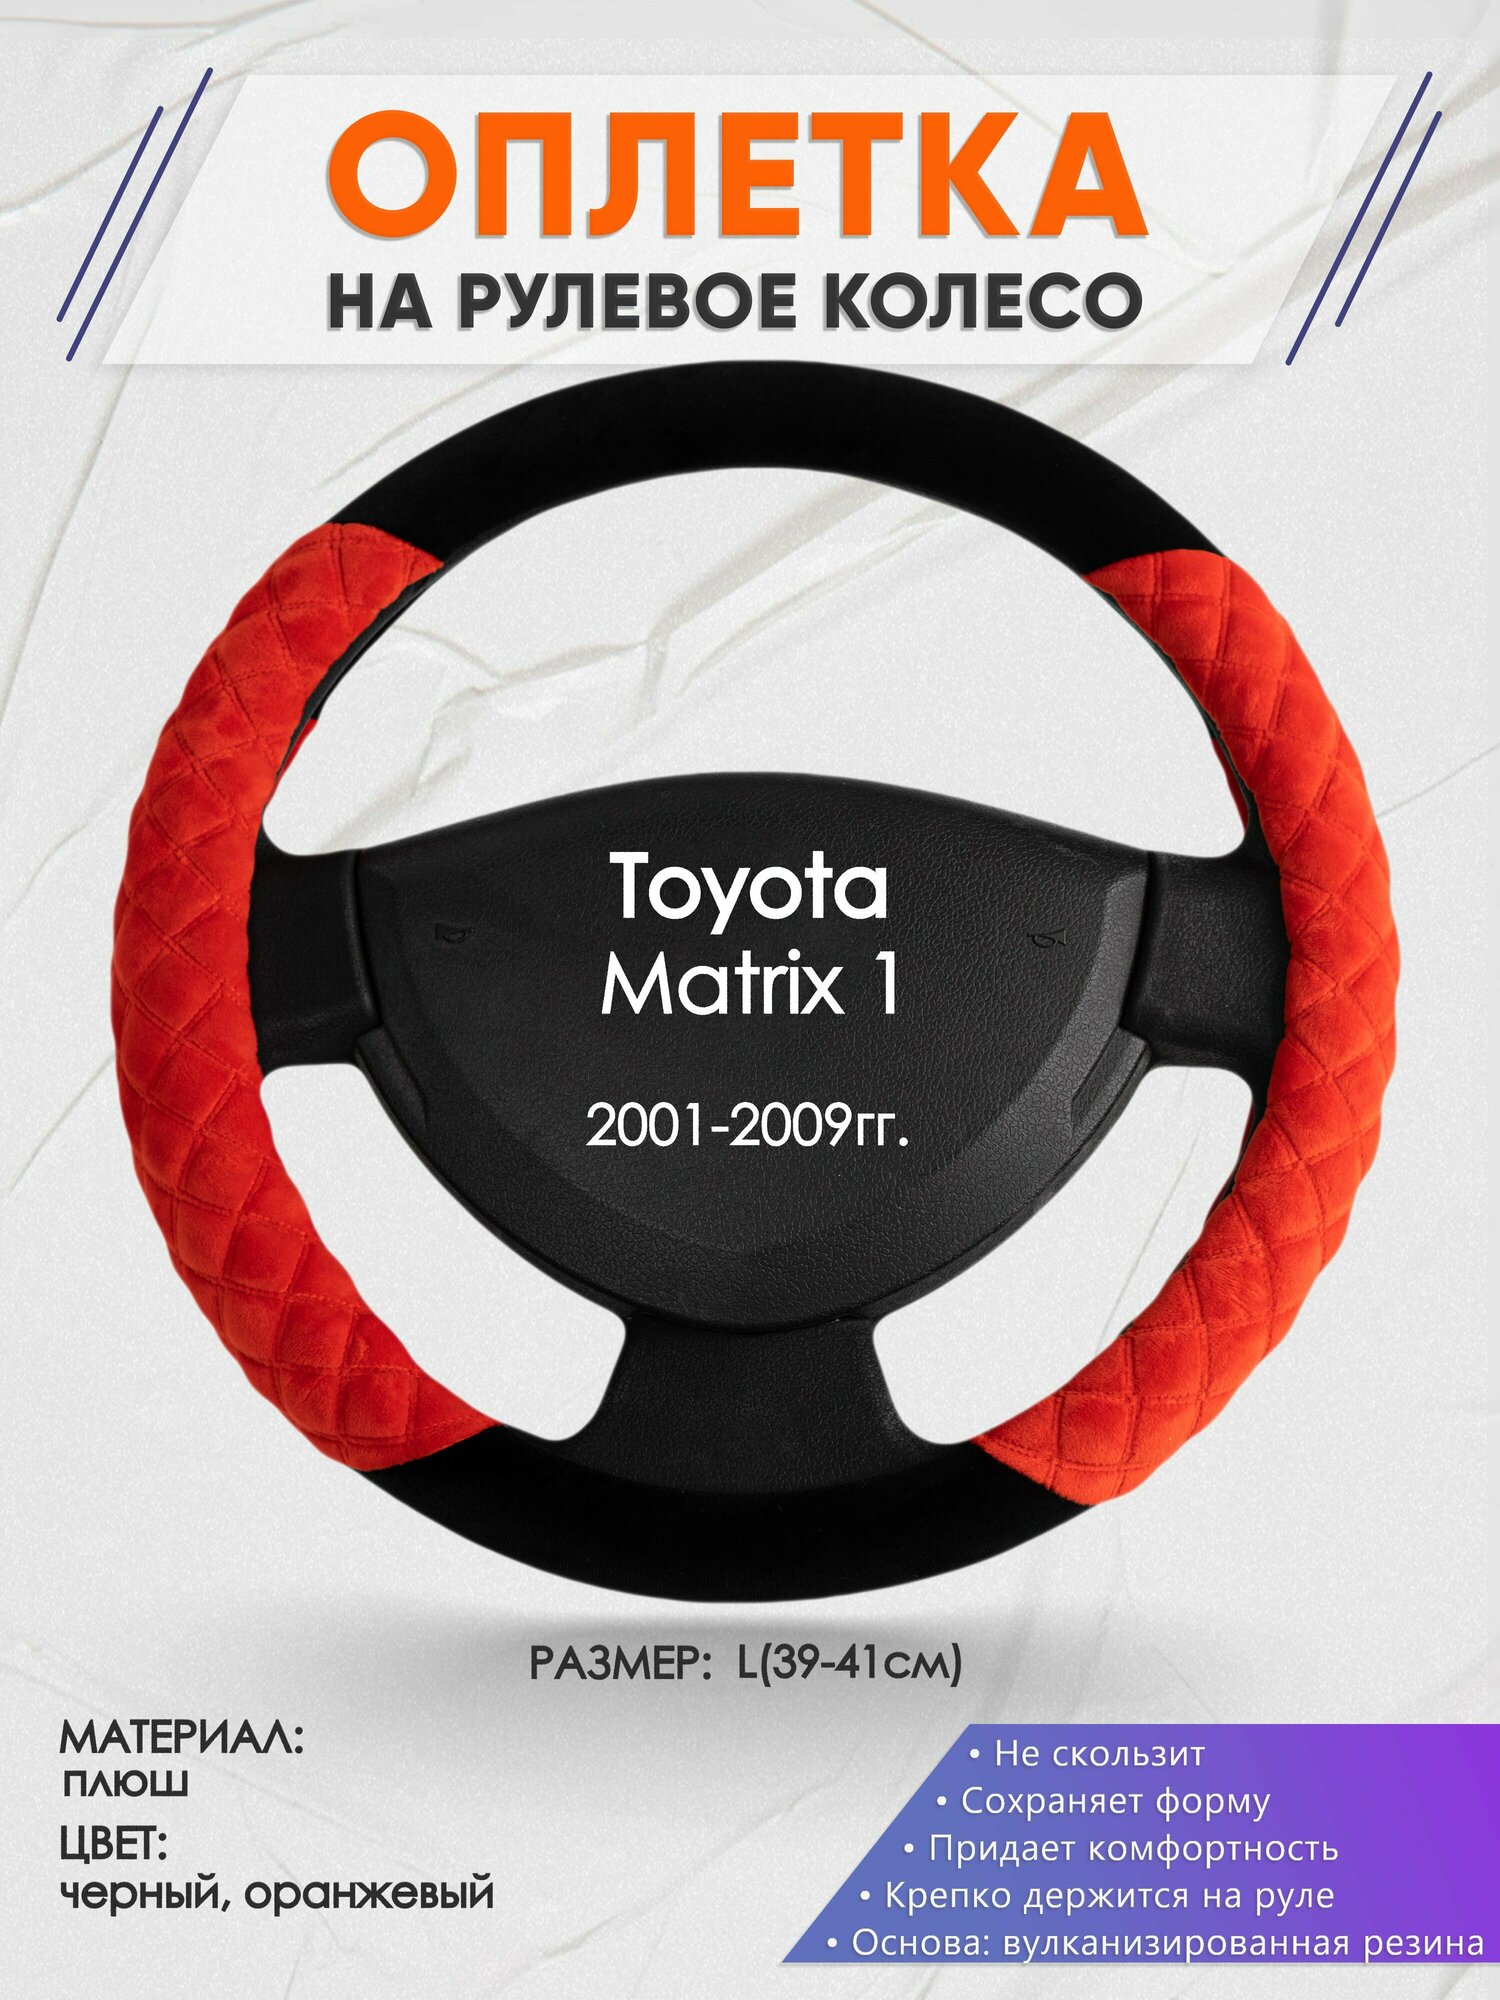 Оплетка на руль для Toyota Matrix 1(Тойота Матрикс) 2001-2009, L(39-41см), Замша 37